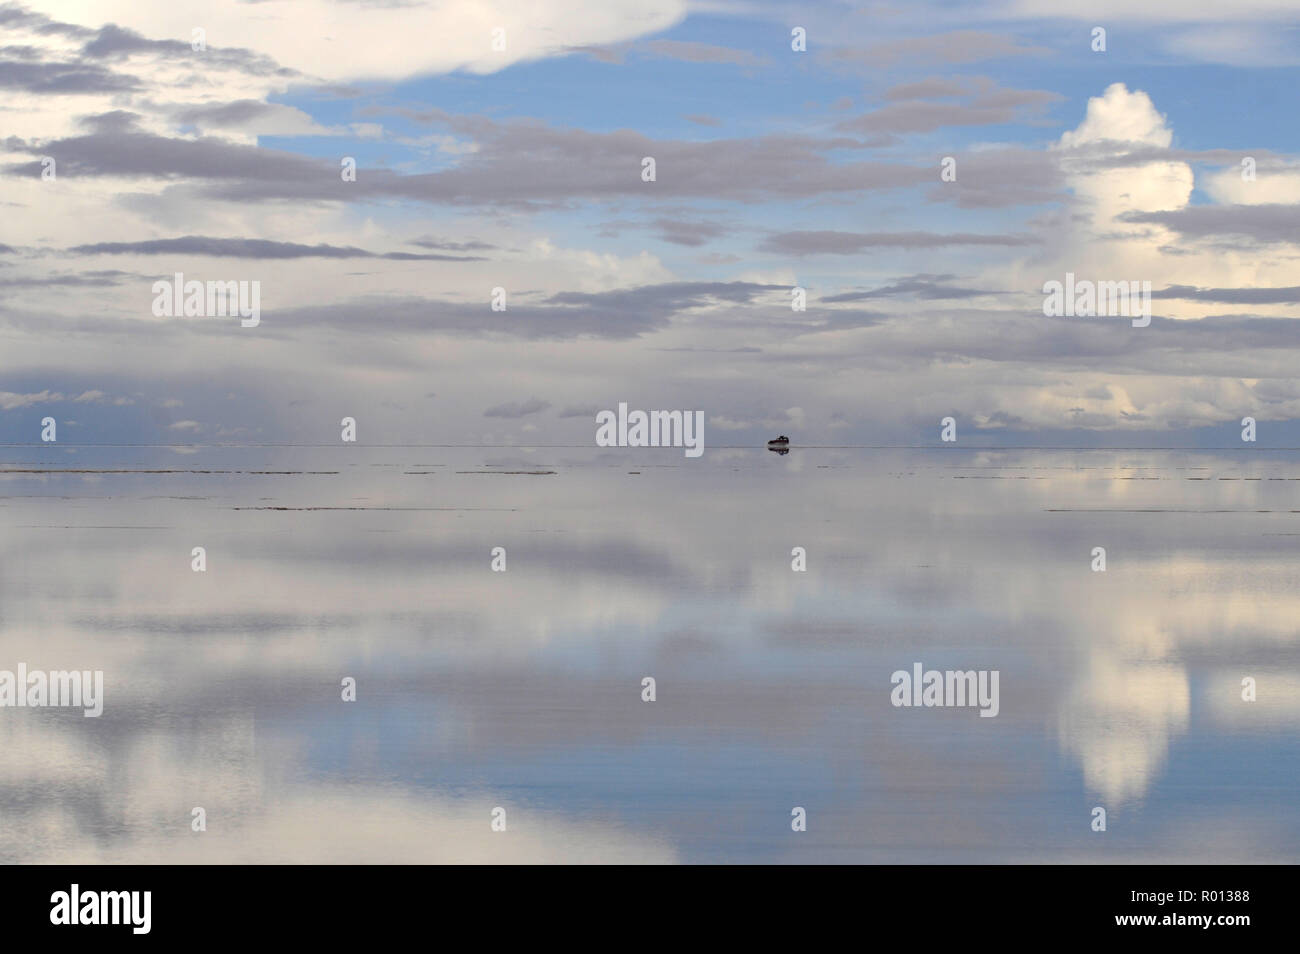 25. Februar 2010 - Salar de Uyuni, Bolivien: Landschaft in der Salar de Uyuni, Bolivien erstaunliche Salzwüste erfasst. 4WDs in der Salar de Uyuni. Voitures dans le Salar de Uyuni, un-Wüste de Sel d'un Blanc eclatant de Bolivie. Quand le Salar est recouvert d'eau, Il se transforme en un immense Miroir refletant Le ciel de maniere quasiment parfaite. *** Frankreich/KEINE VERKÄUFE IN DEN FRANZÖSISCHEN MEDIEN *** Stockfoto